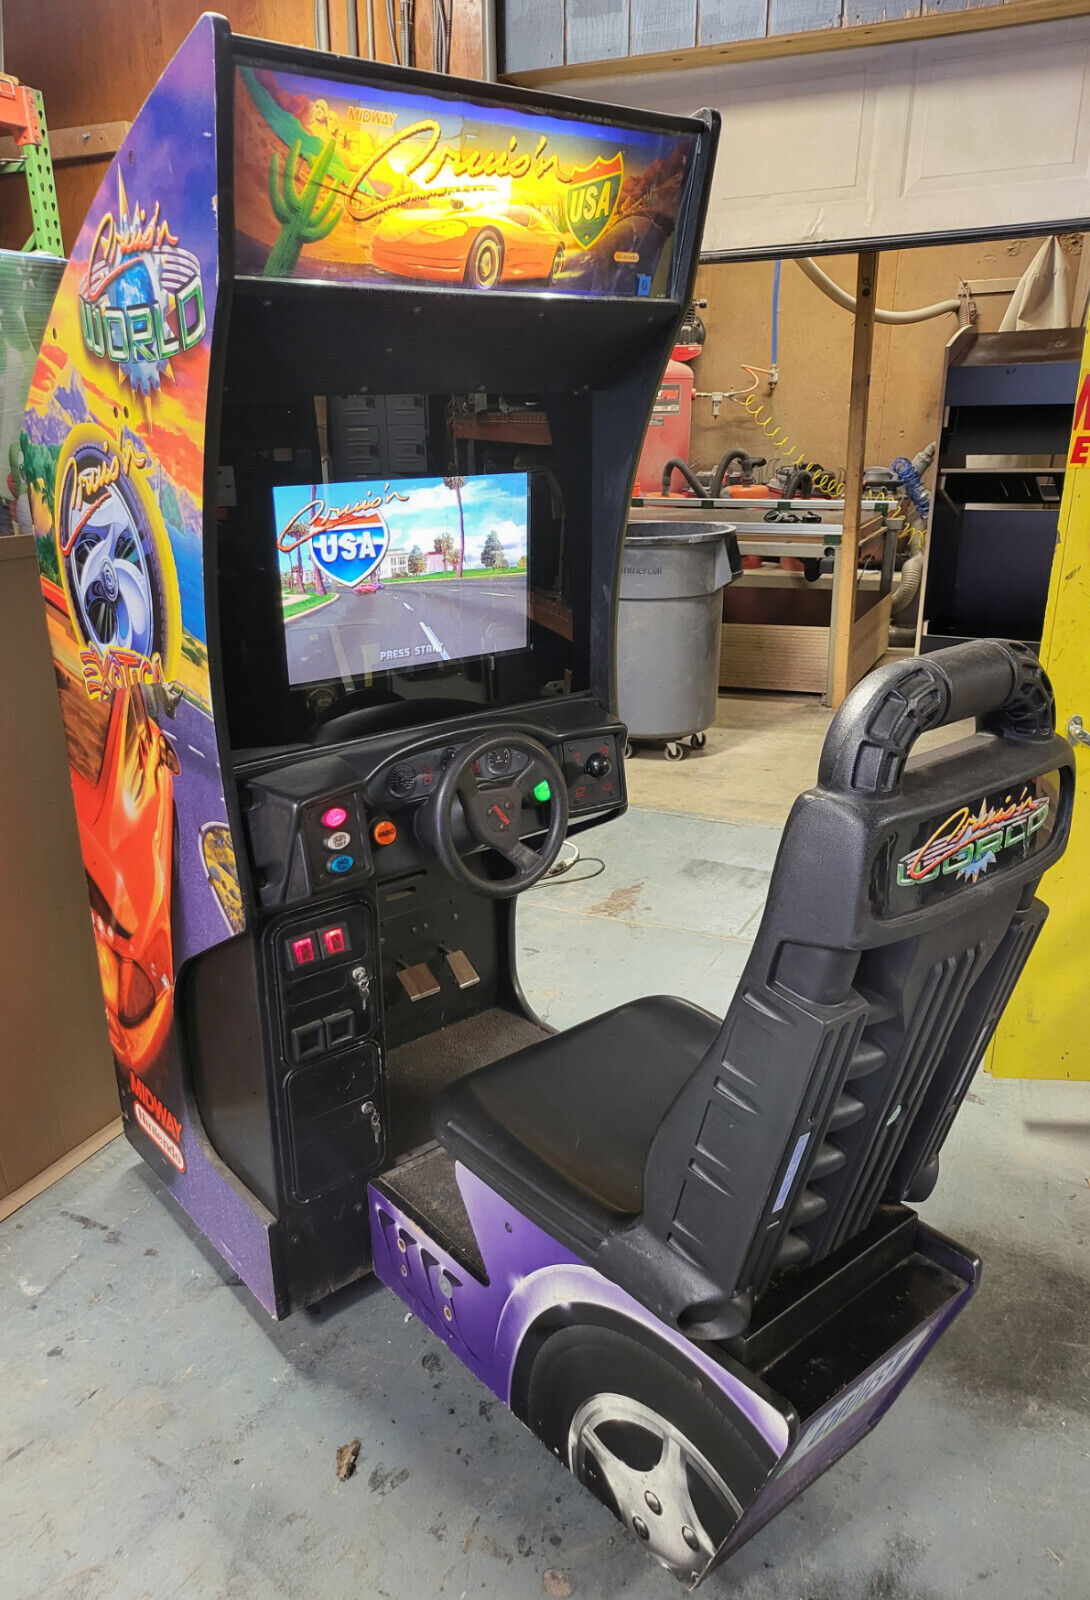 Cruisn USA Arcade Sit Down Driving Racing Video Game Machine 22\